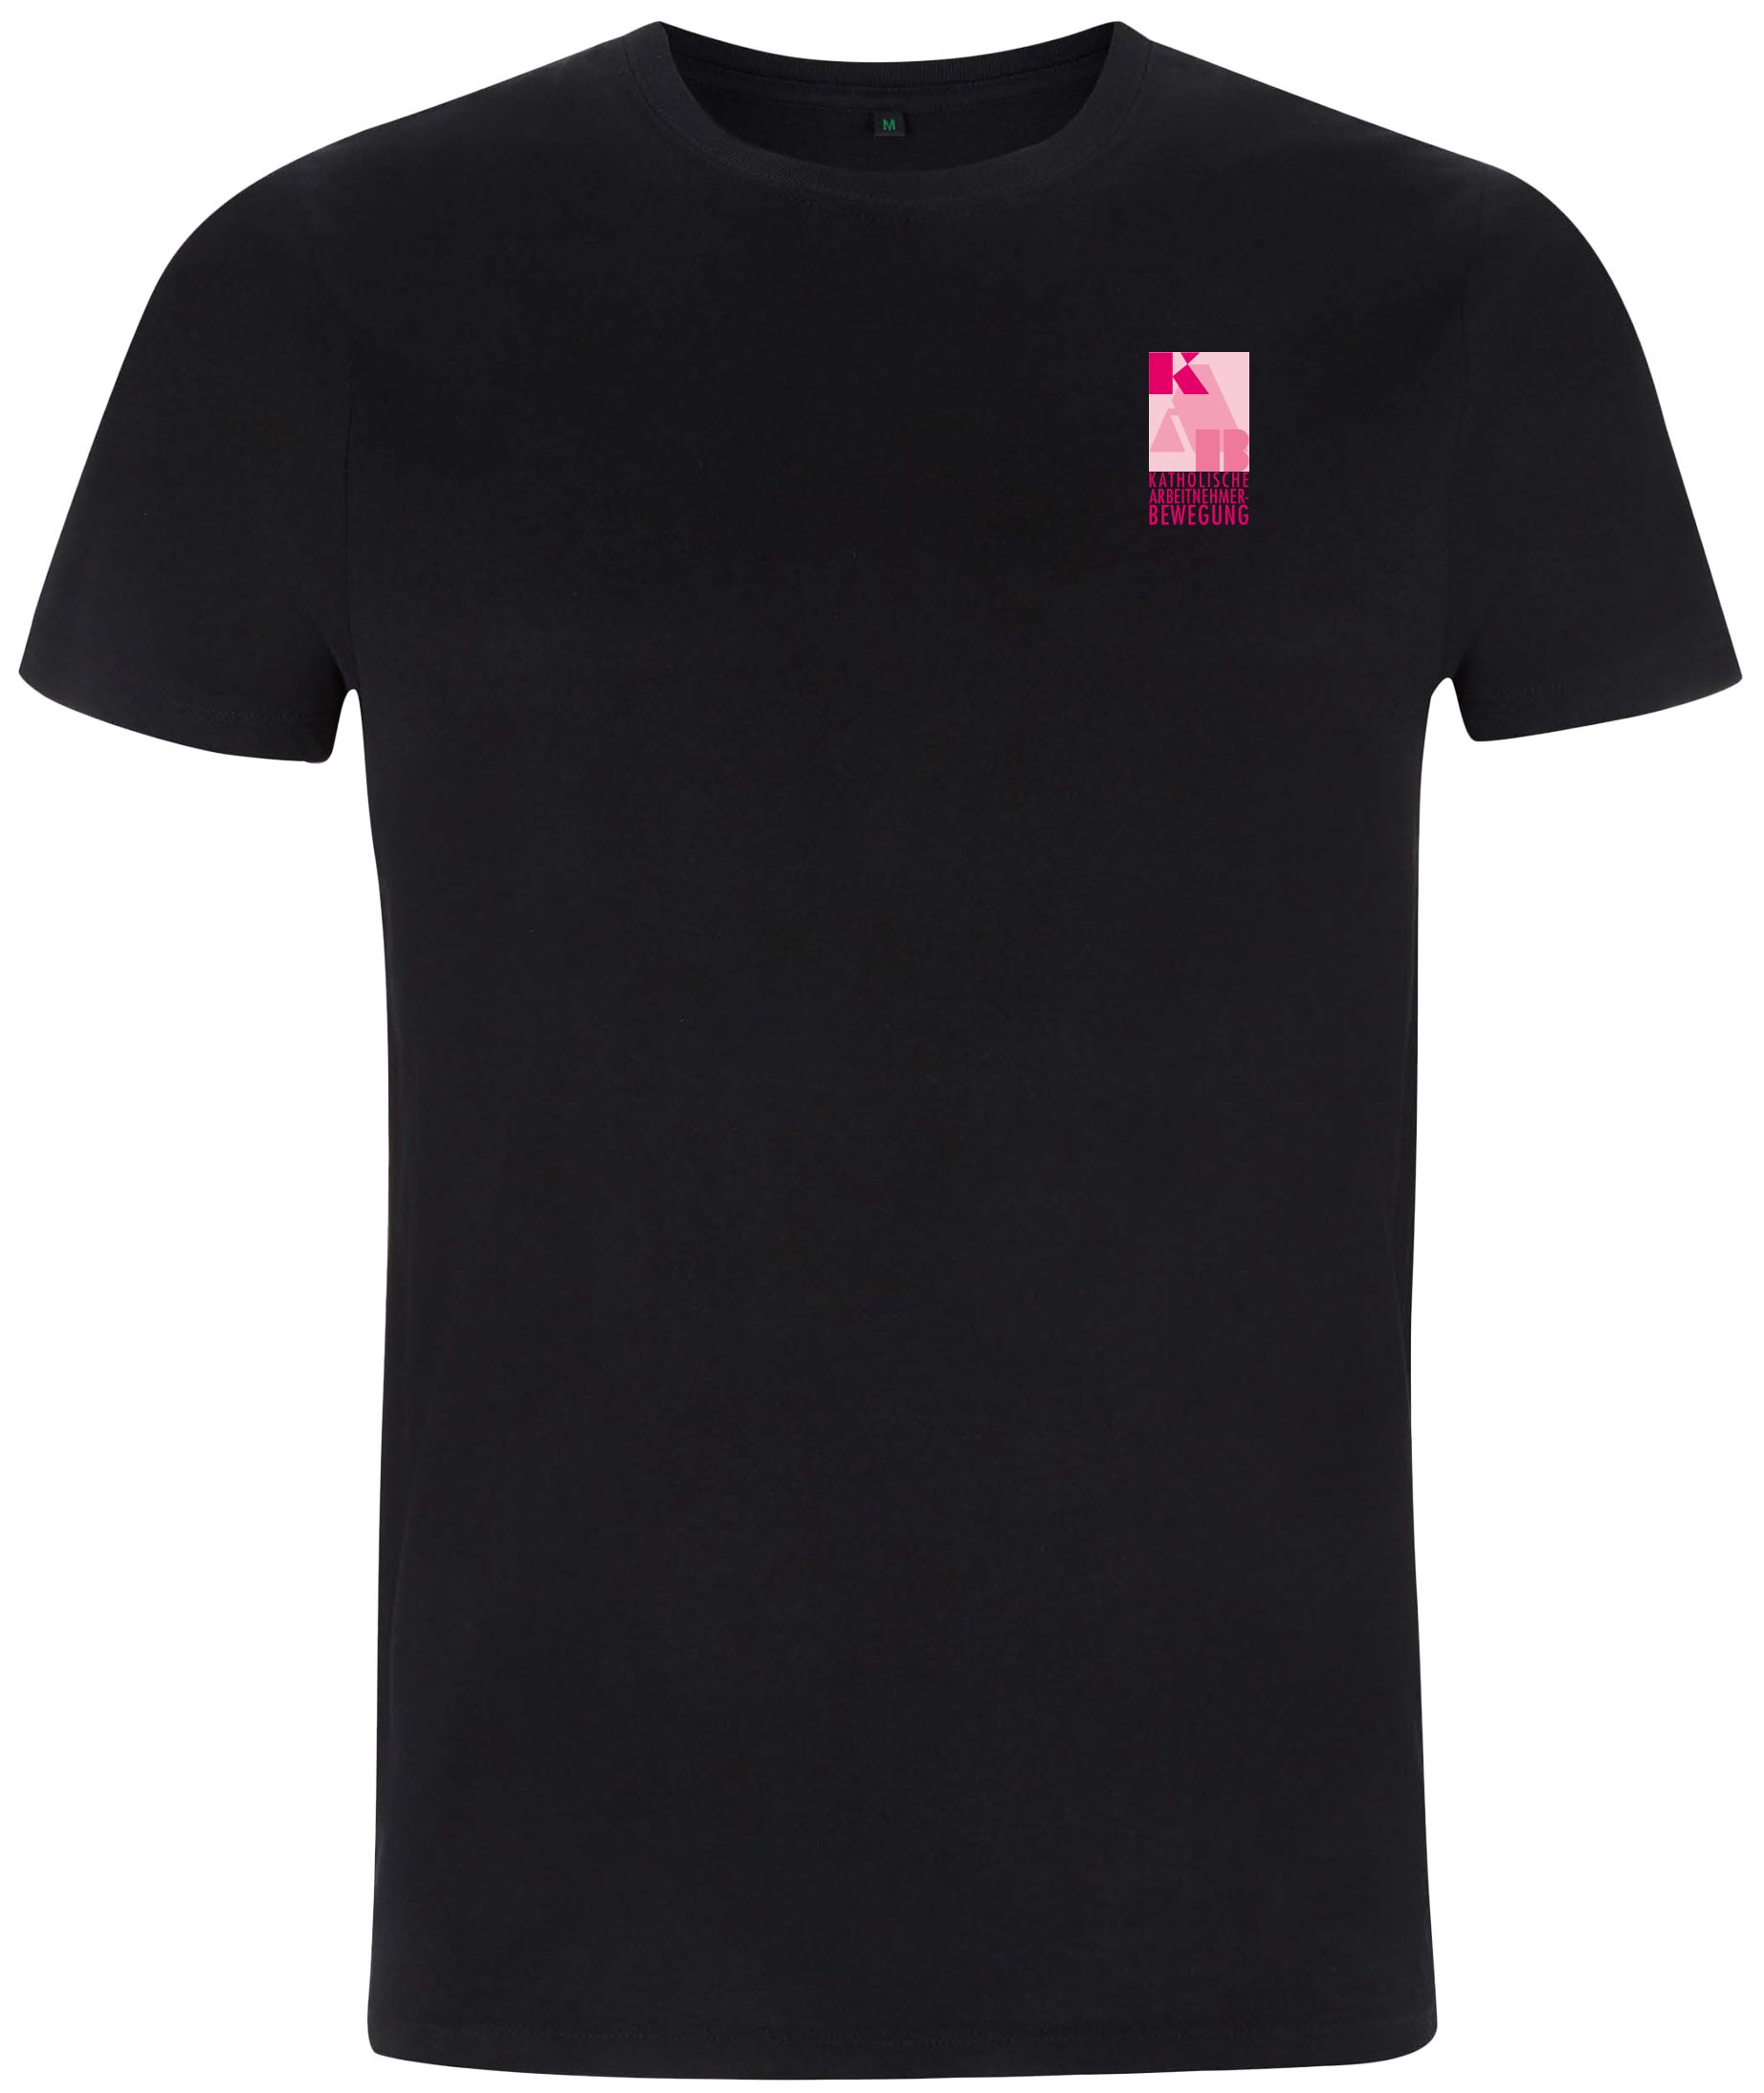 KAB T-Shirt schwarz mit Kampagnenmotiv Gr. S